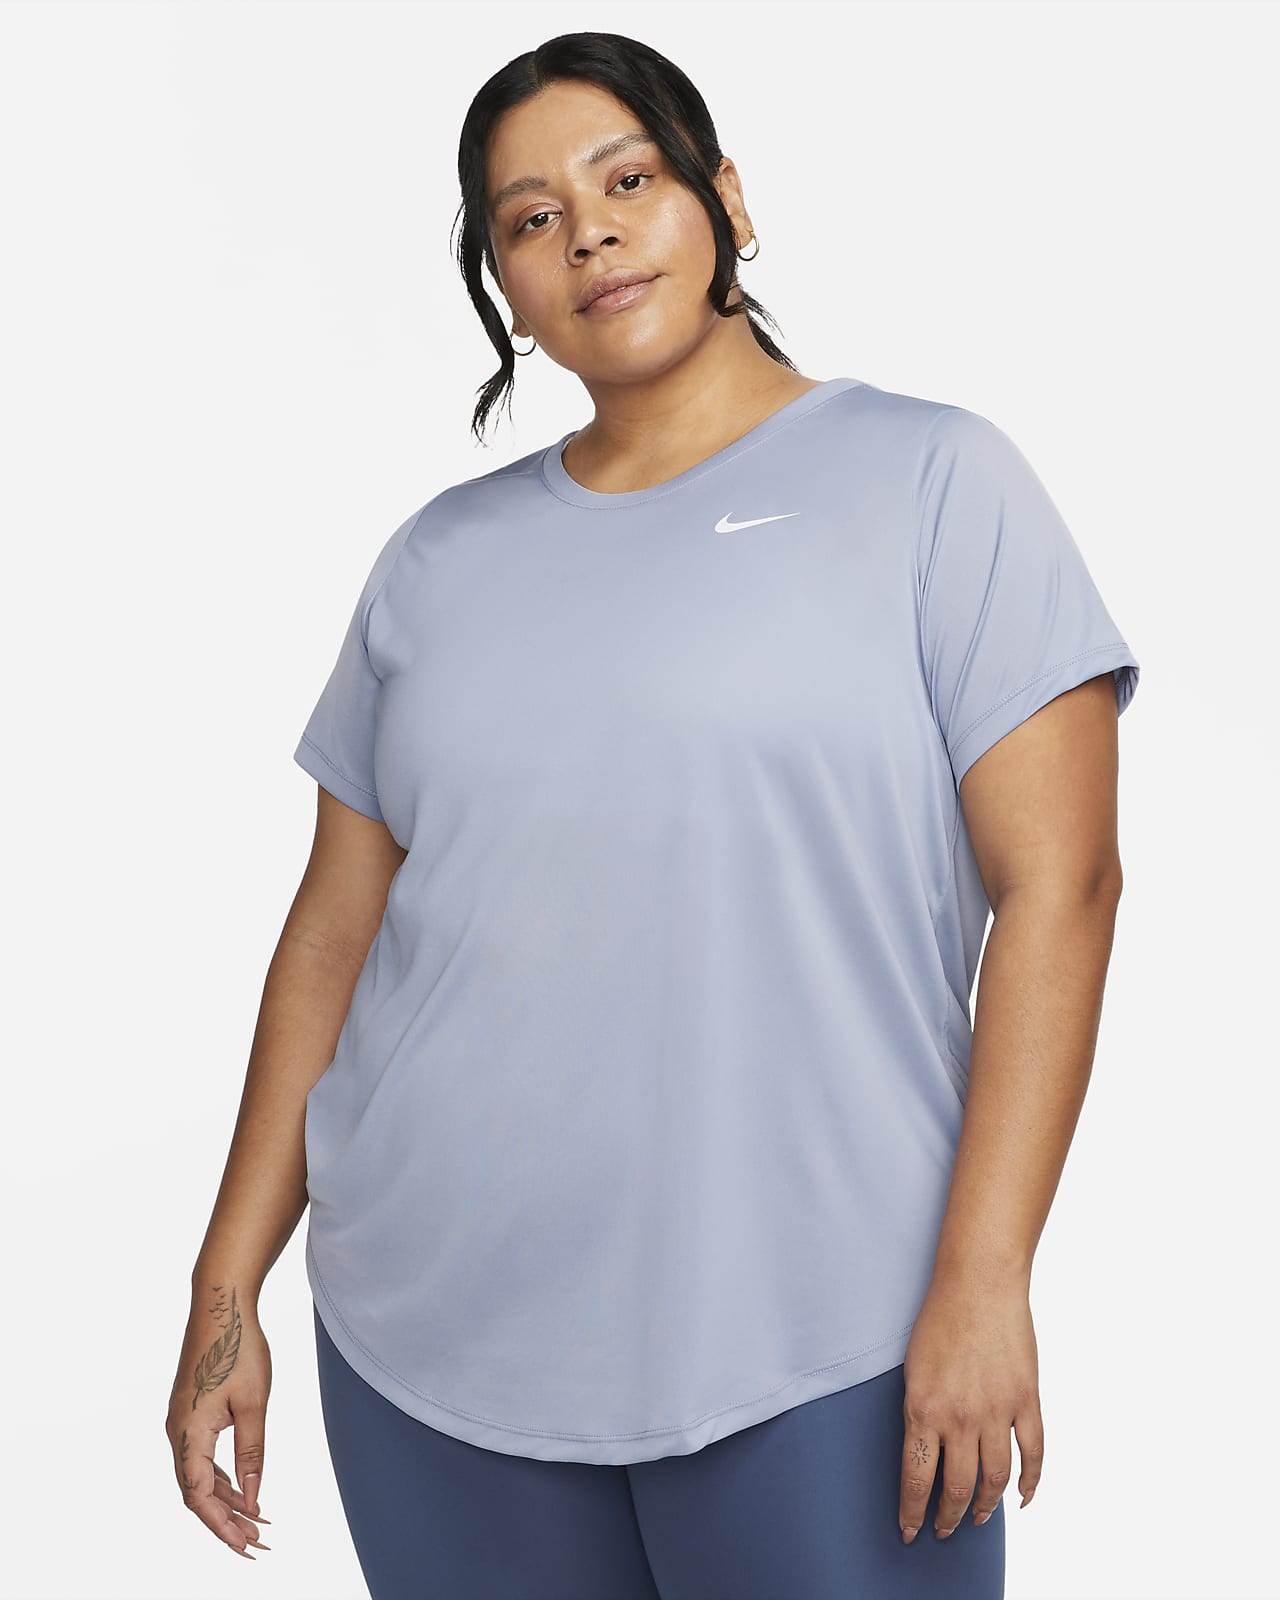 Roeispaan Fonkeling tiener Nike Dri-FIT Women's T-Shirt (Plus Size). Nike.com